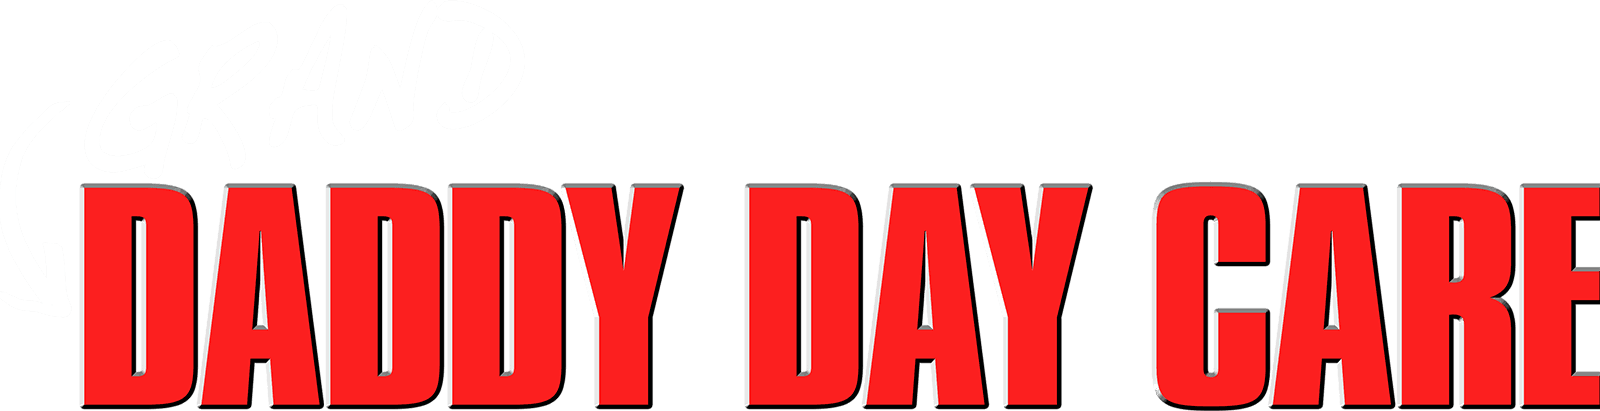 Grand-Daddy Day Care logo